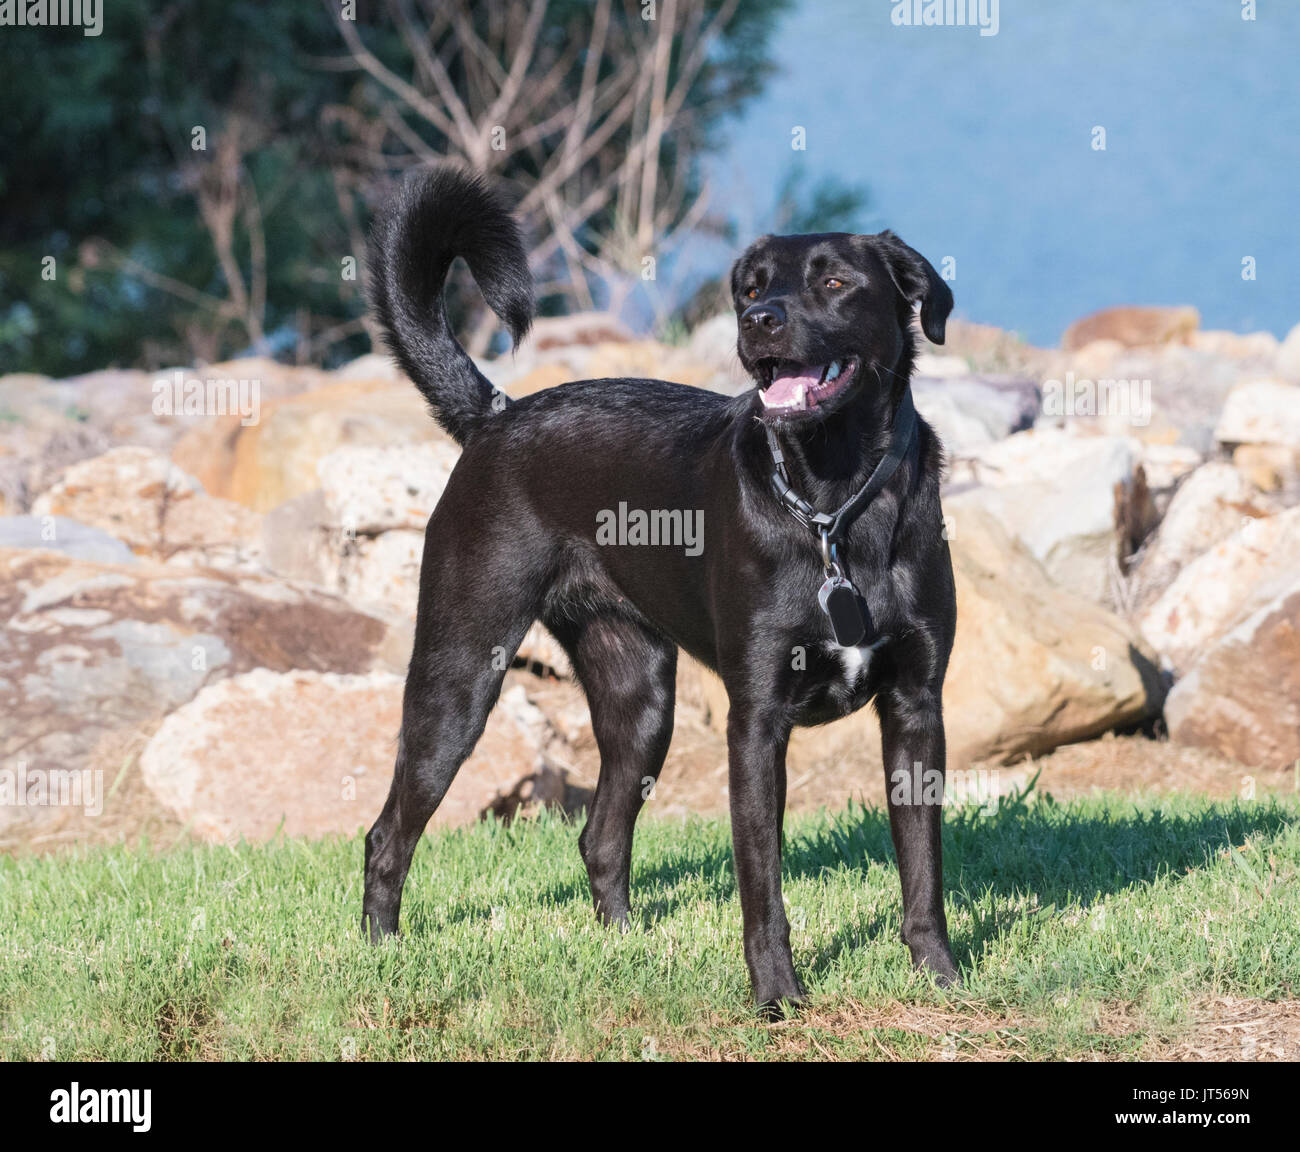 A black Labrador retriever stands on a grassy river bank. Stock Photo